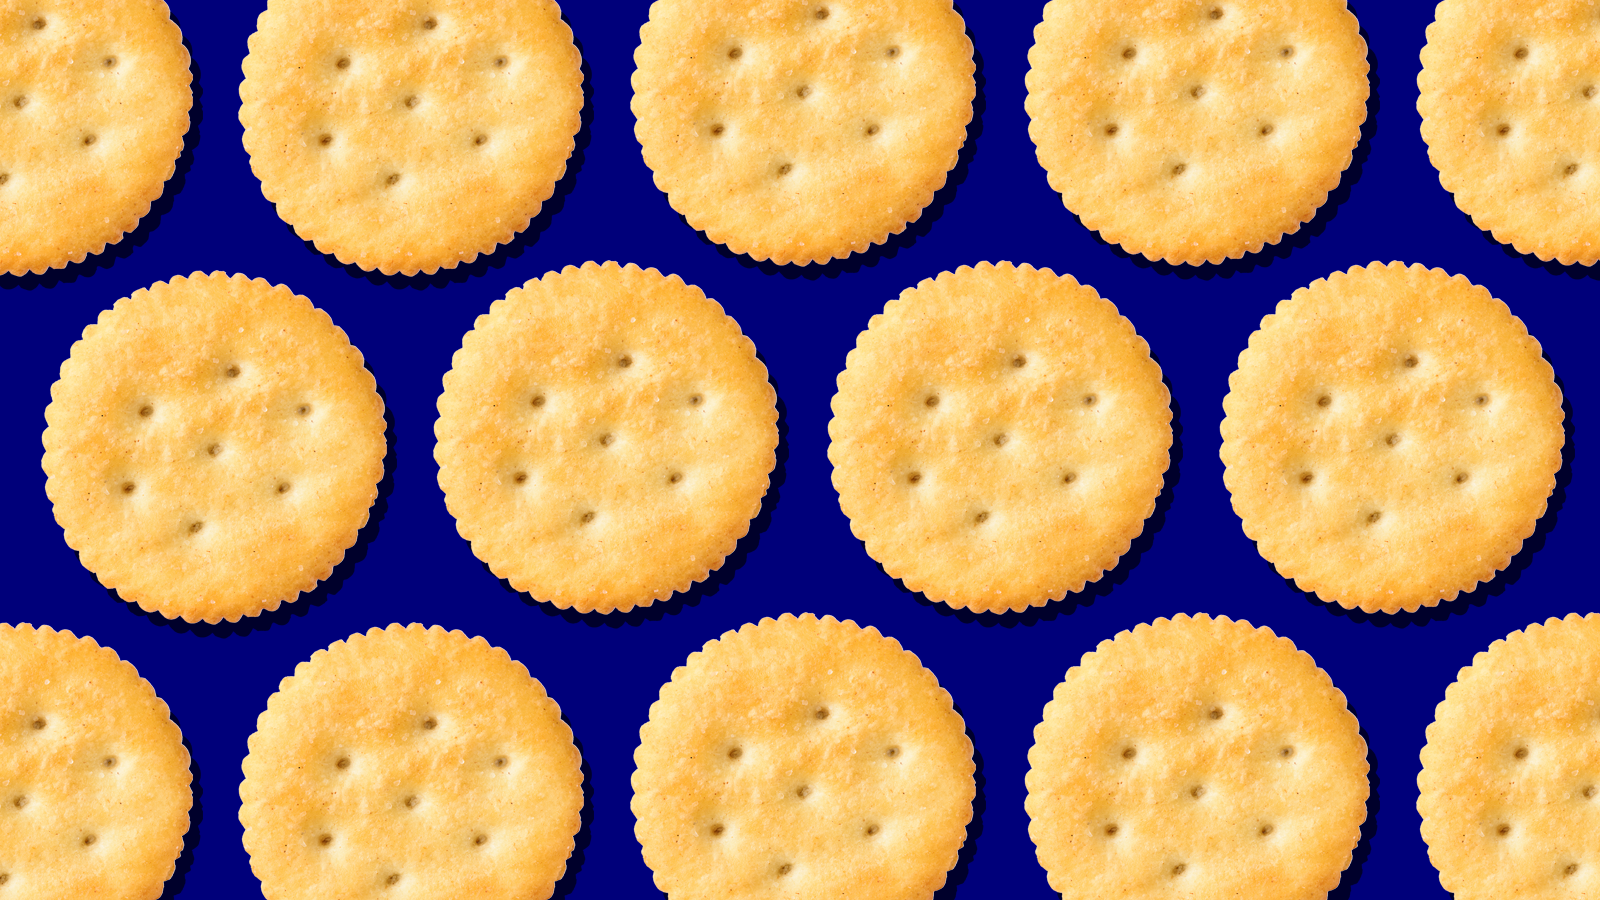 Pattern of Ritz crackers